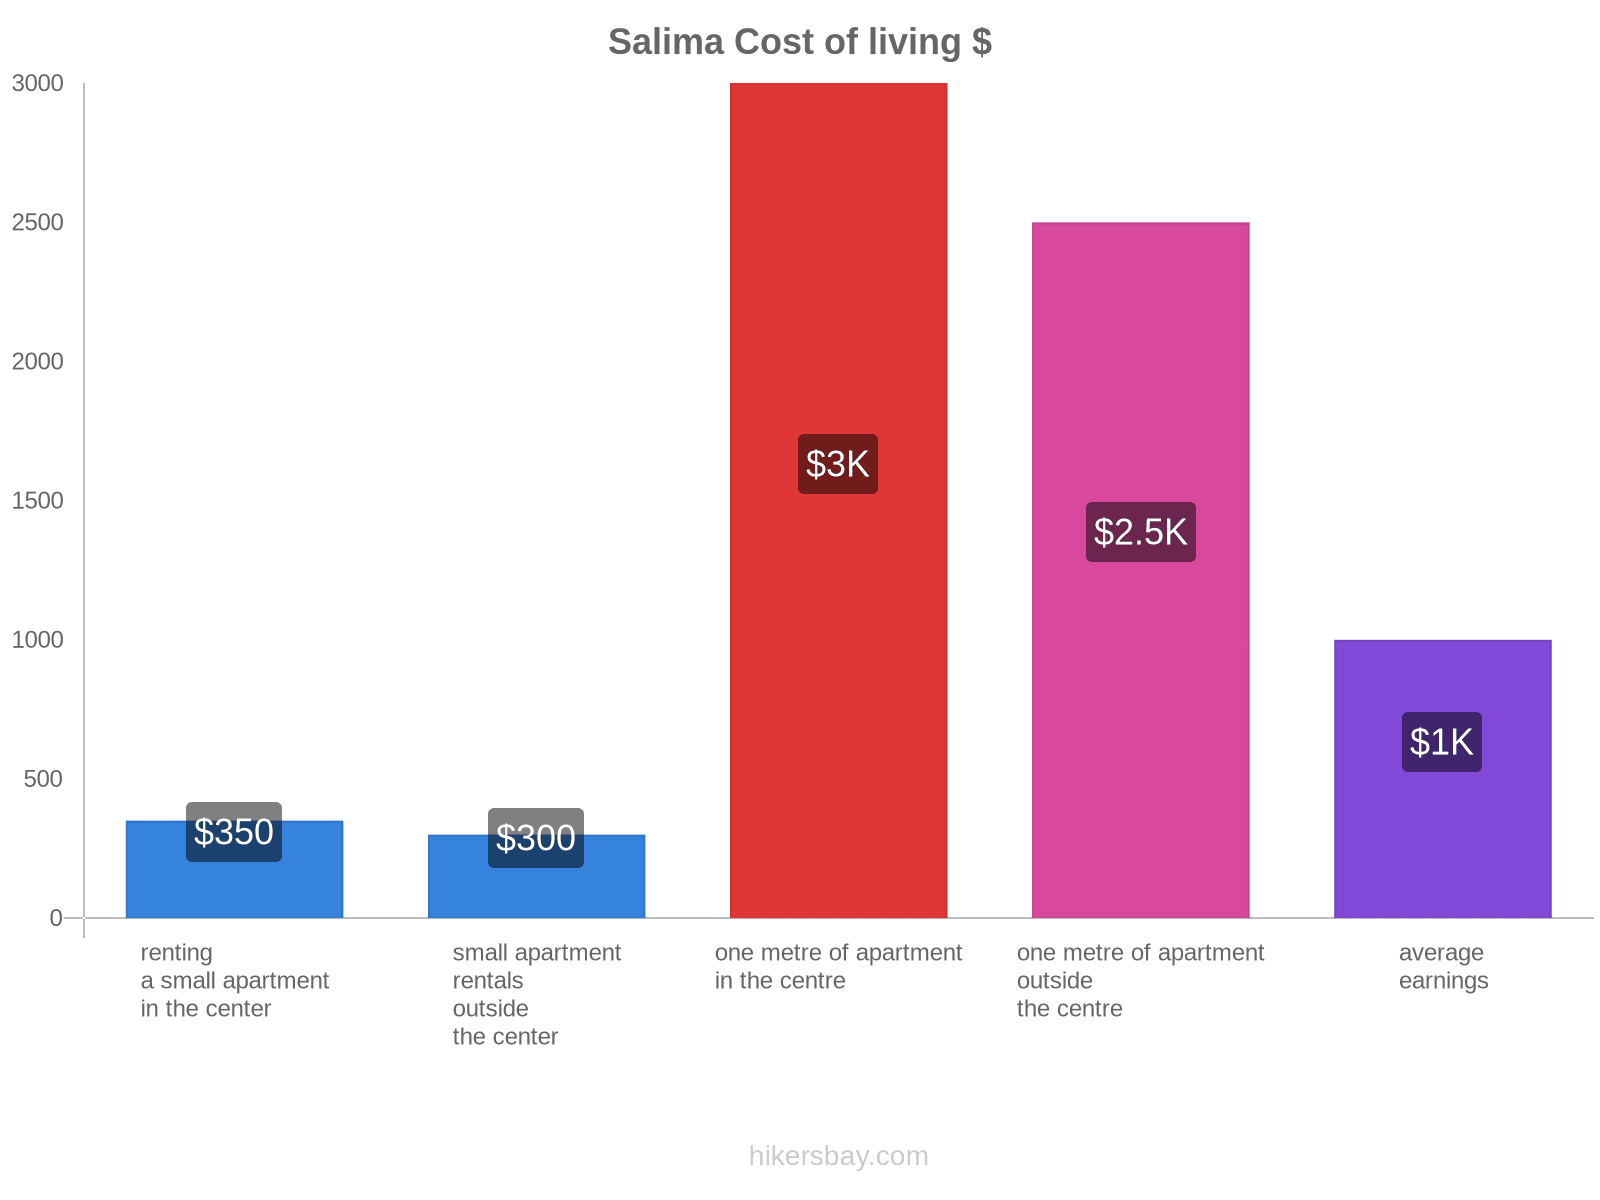 Salima cost of living hikersbay.com